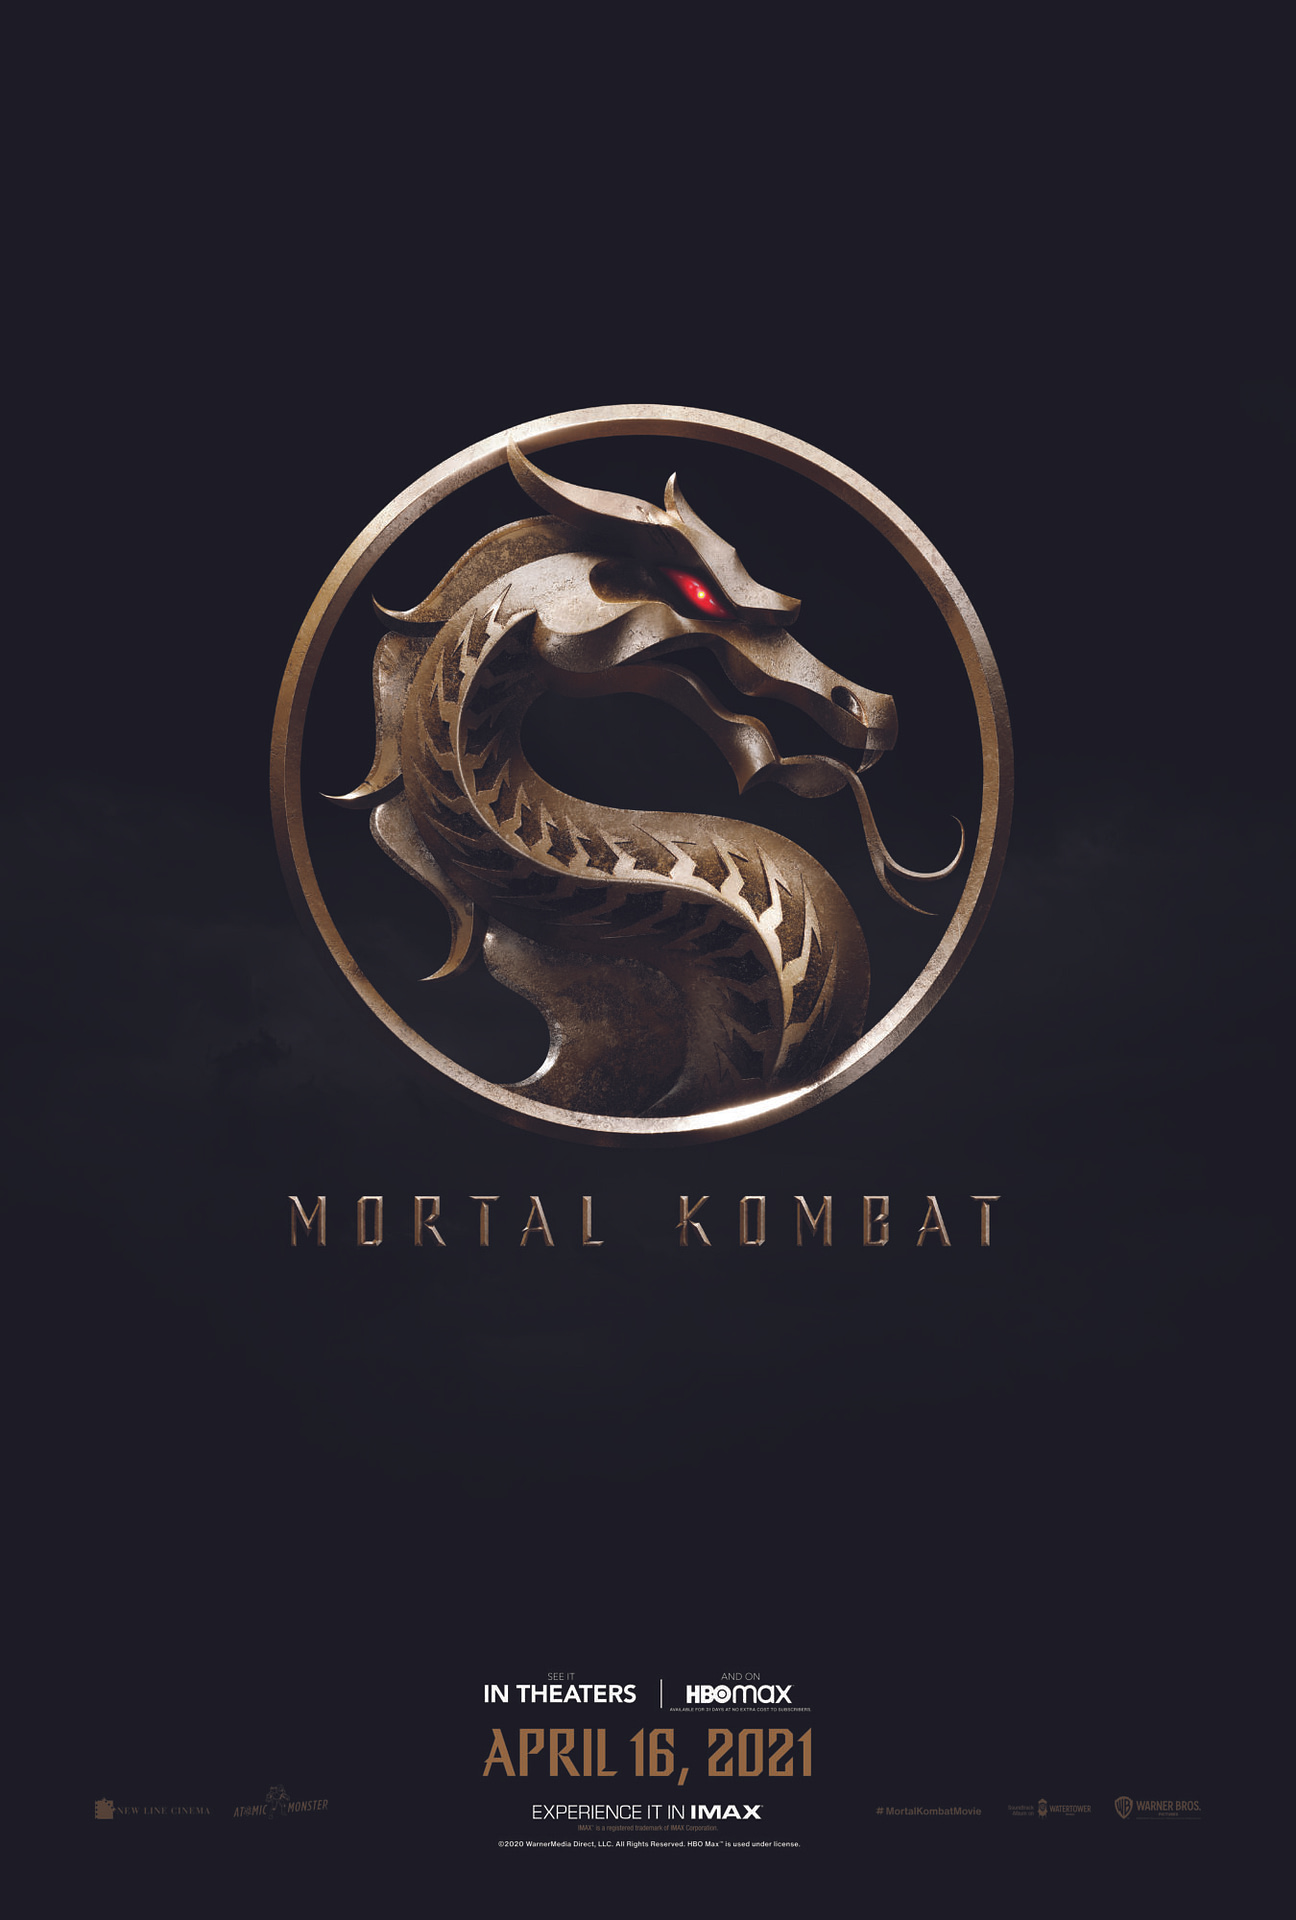 Detailed Summary for Mortal Kombat